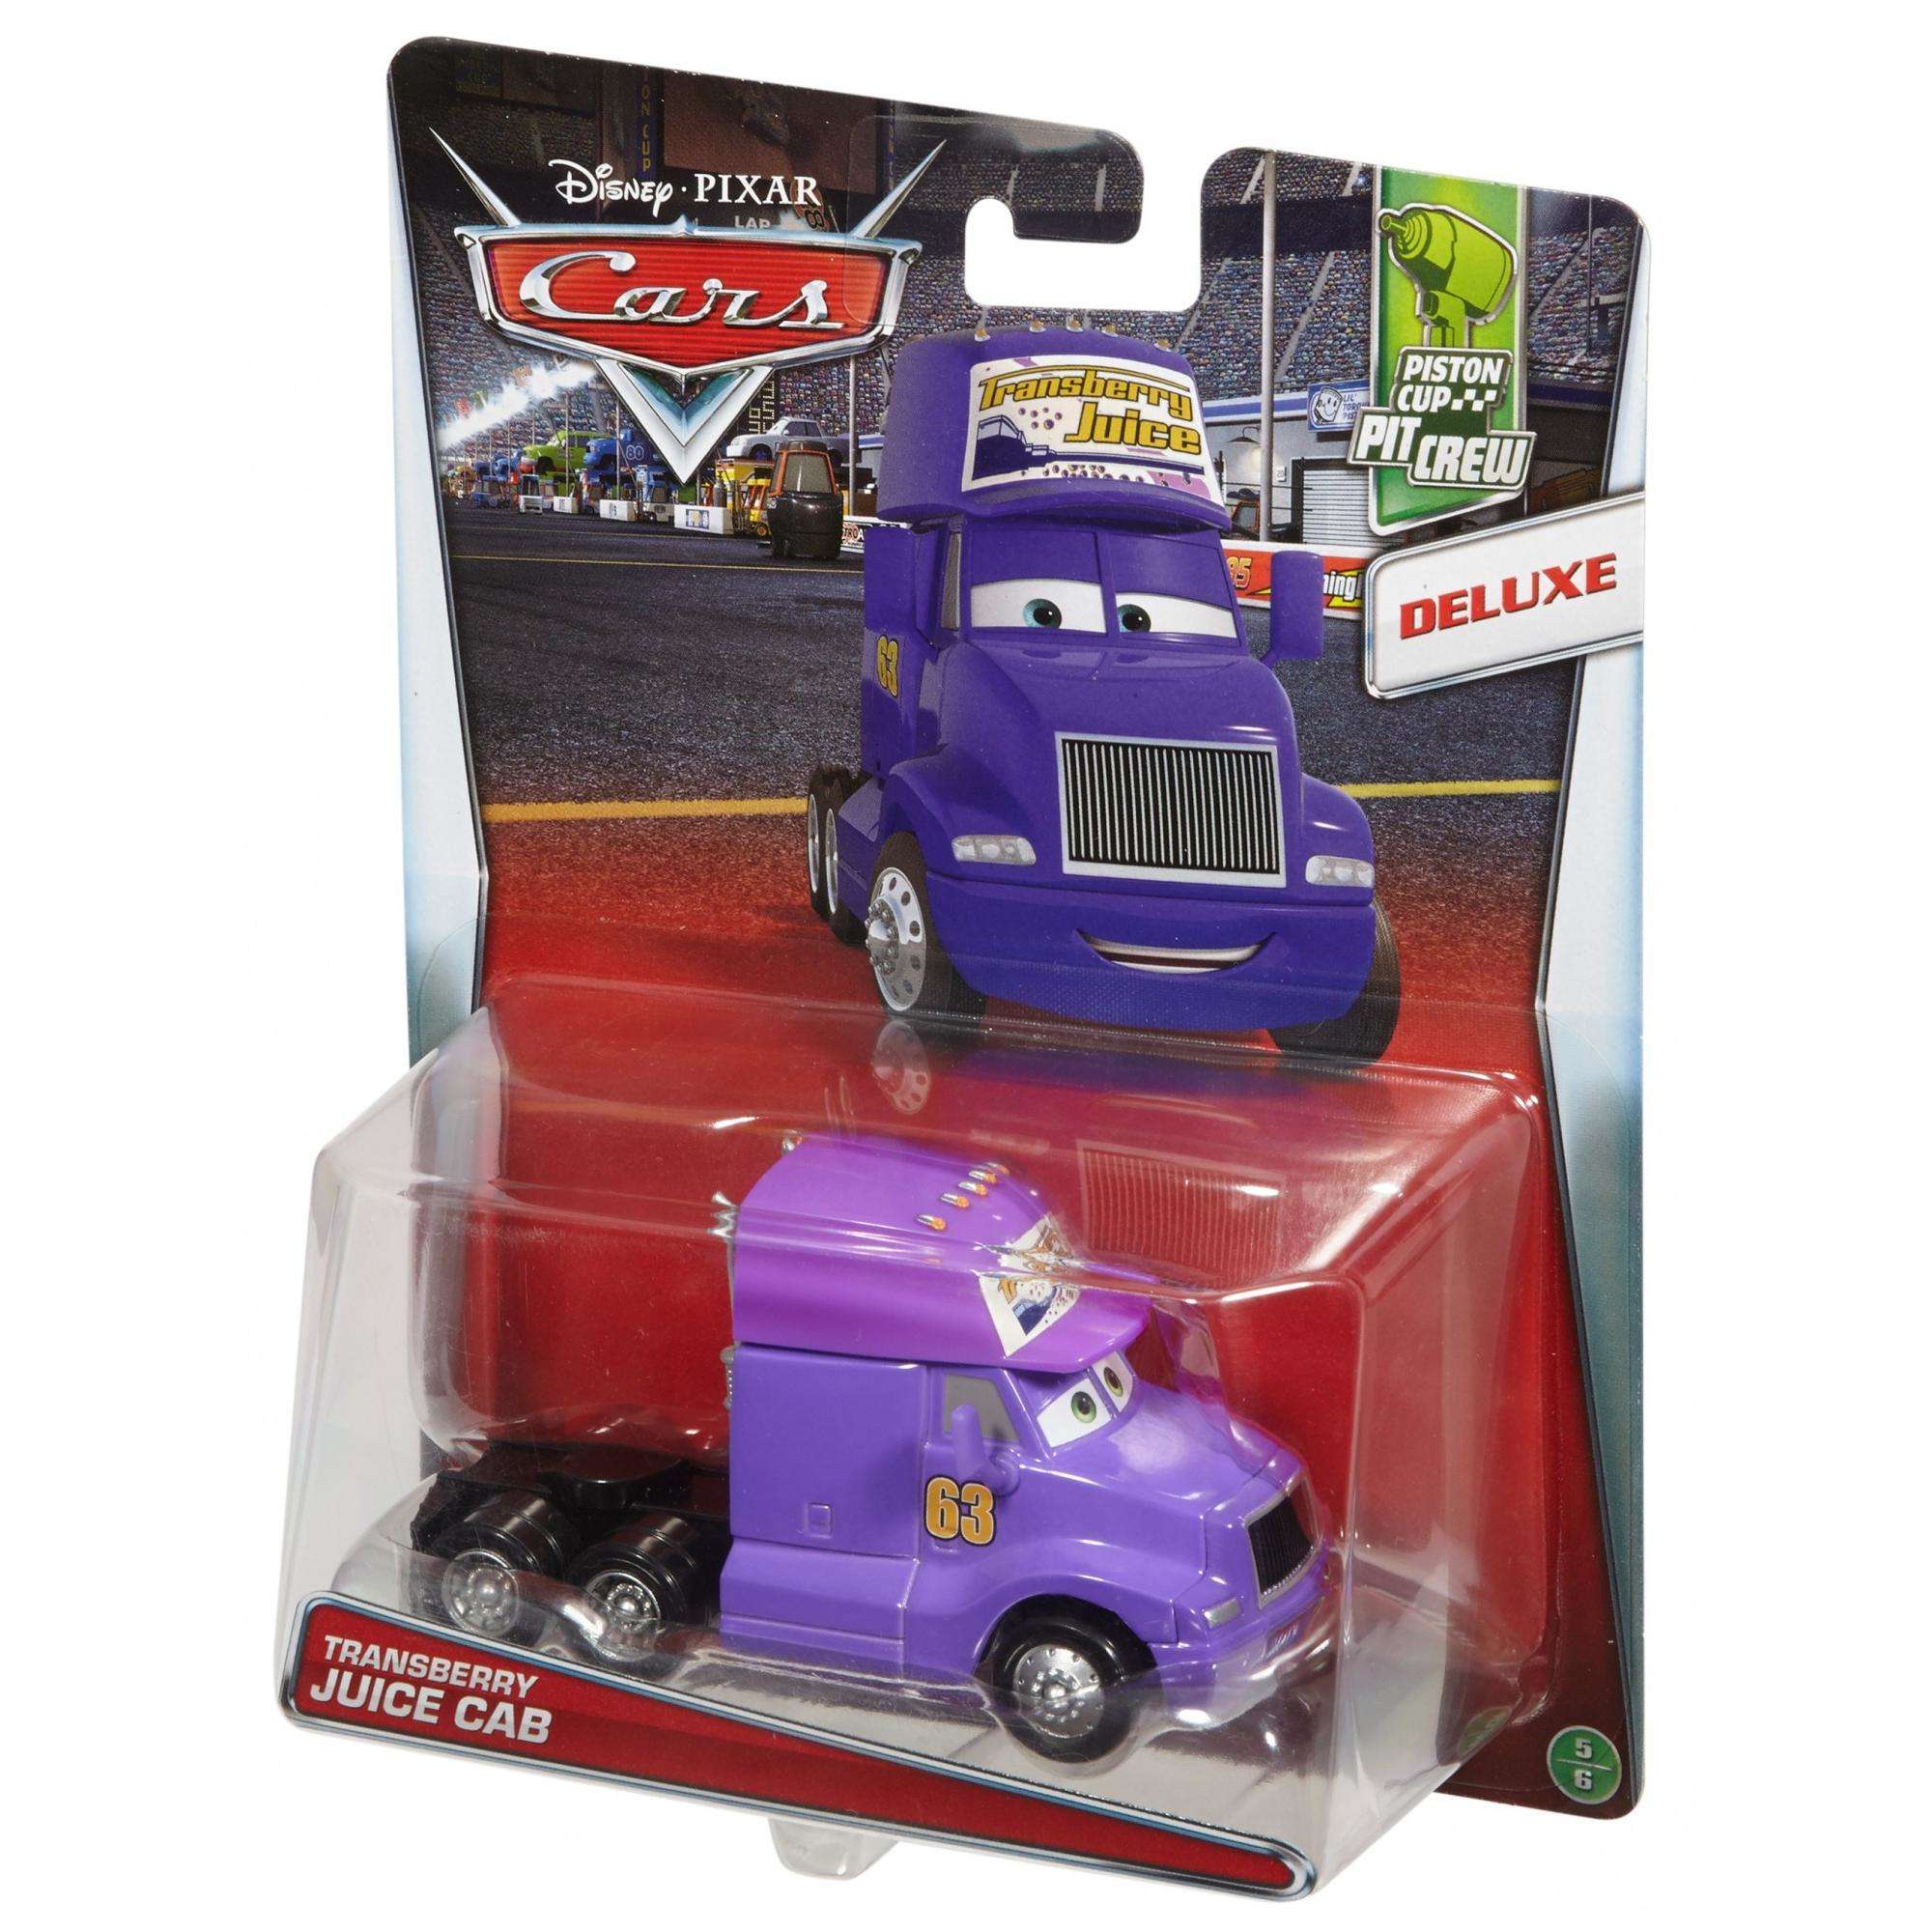 Disney/Pixar Cars Transberry Juice Cab Deluxe Die-Cast Vehicle - image 4 of 8